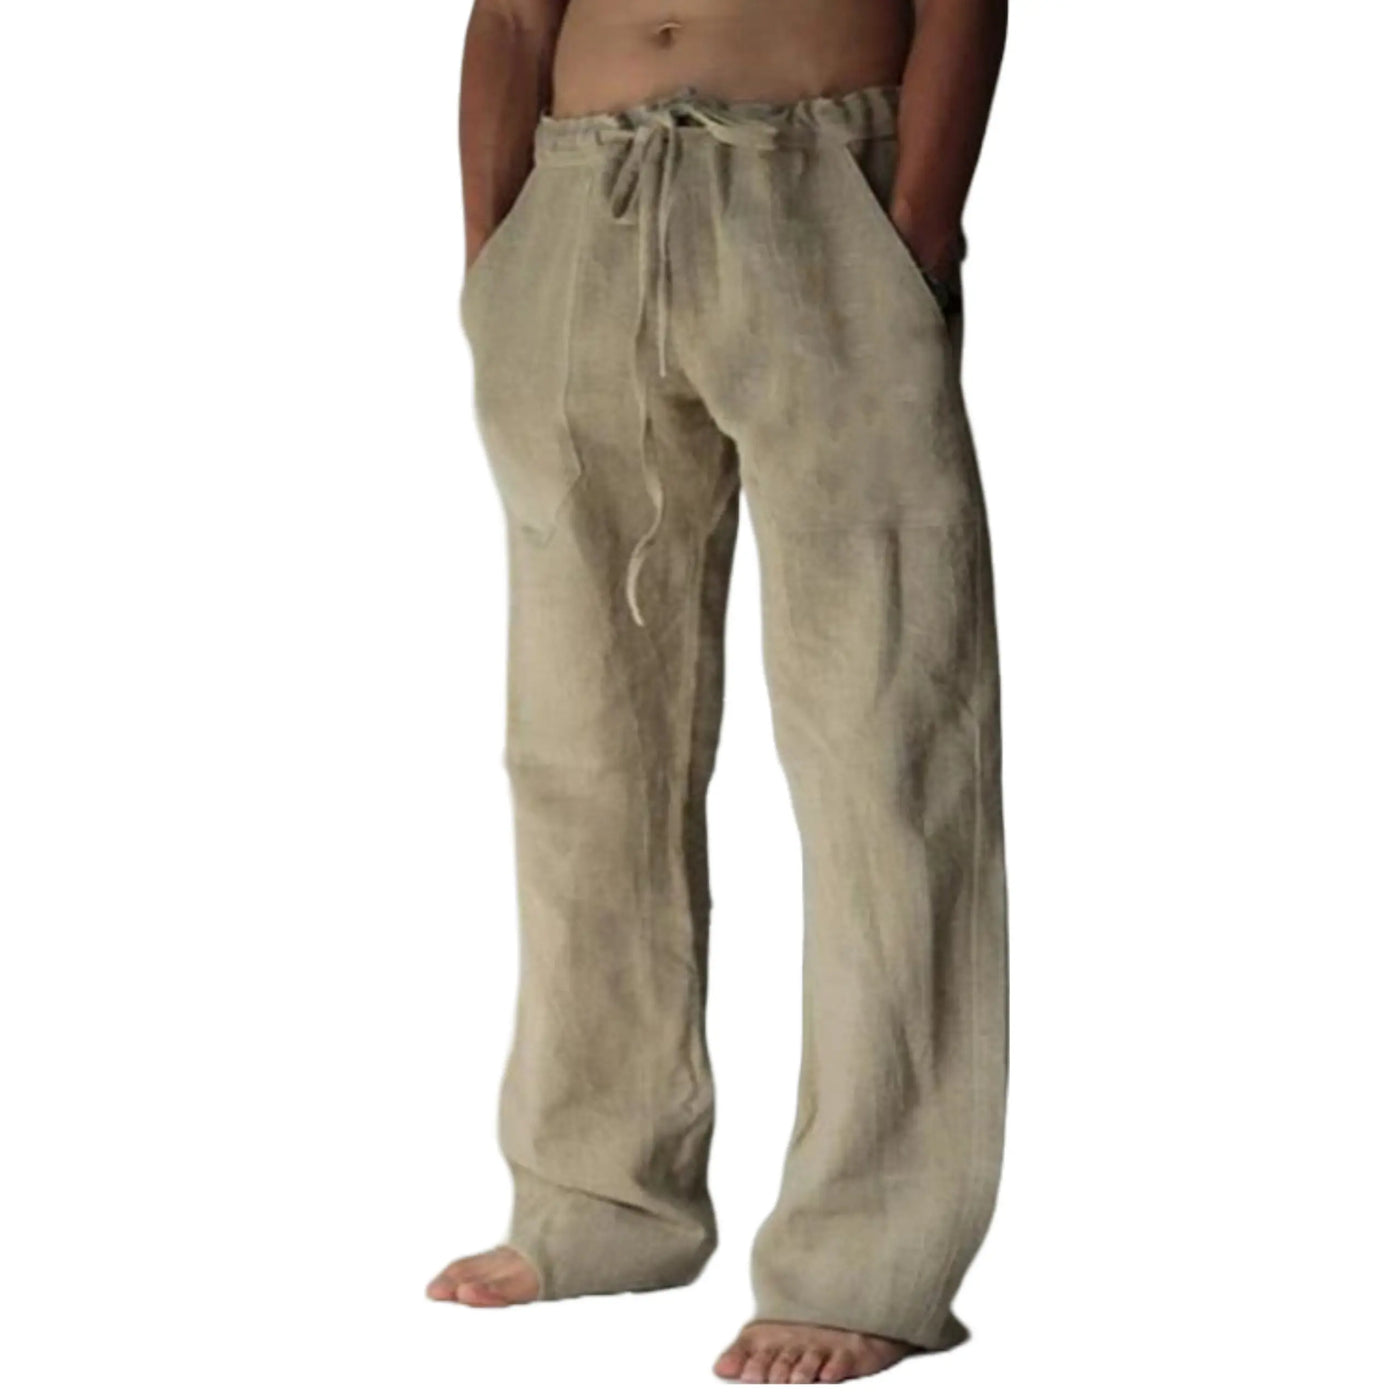 Casual linen pants